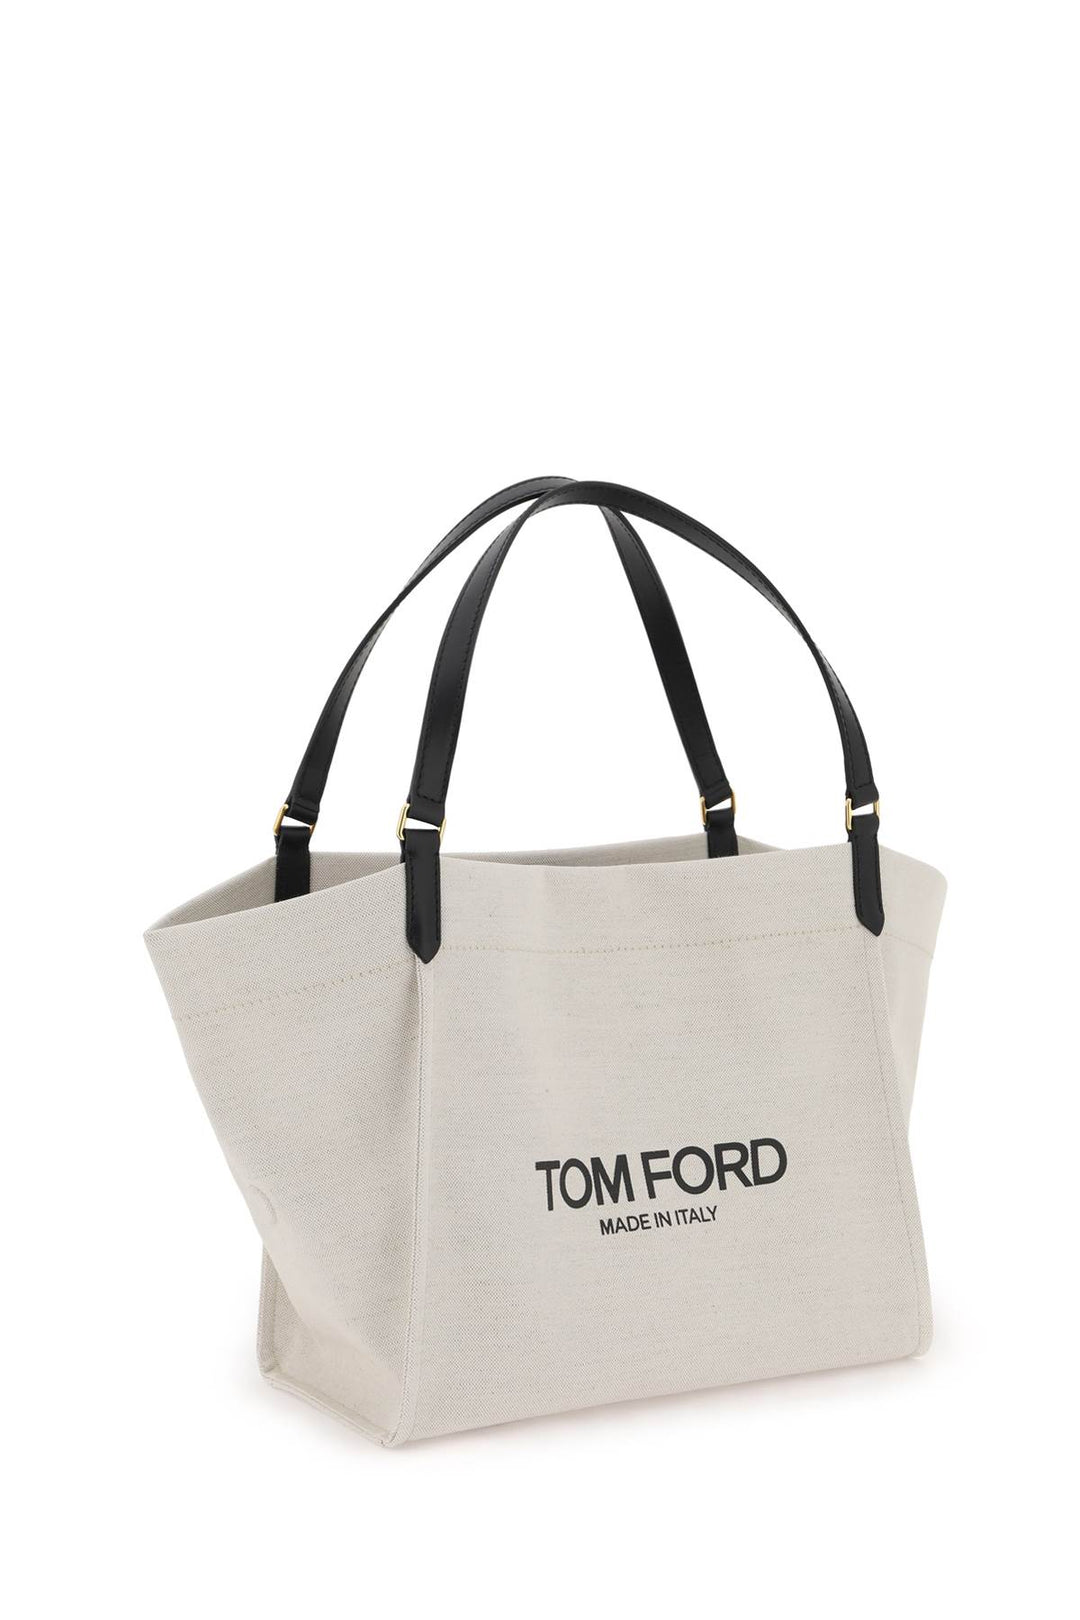 Tom Ford Amalfi Tote Bag   Nero